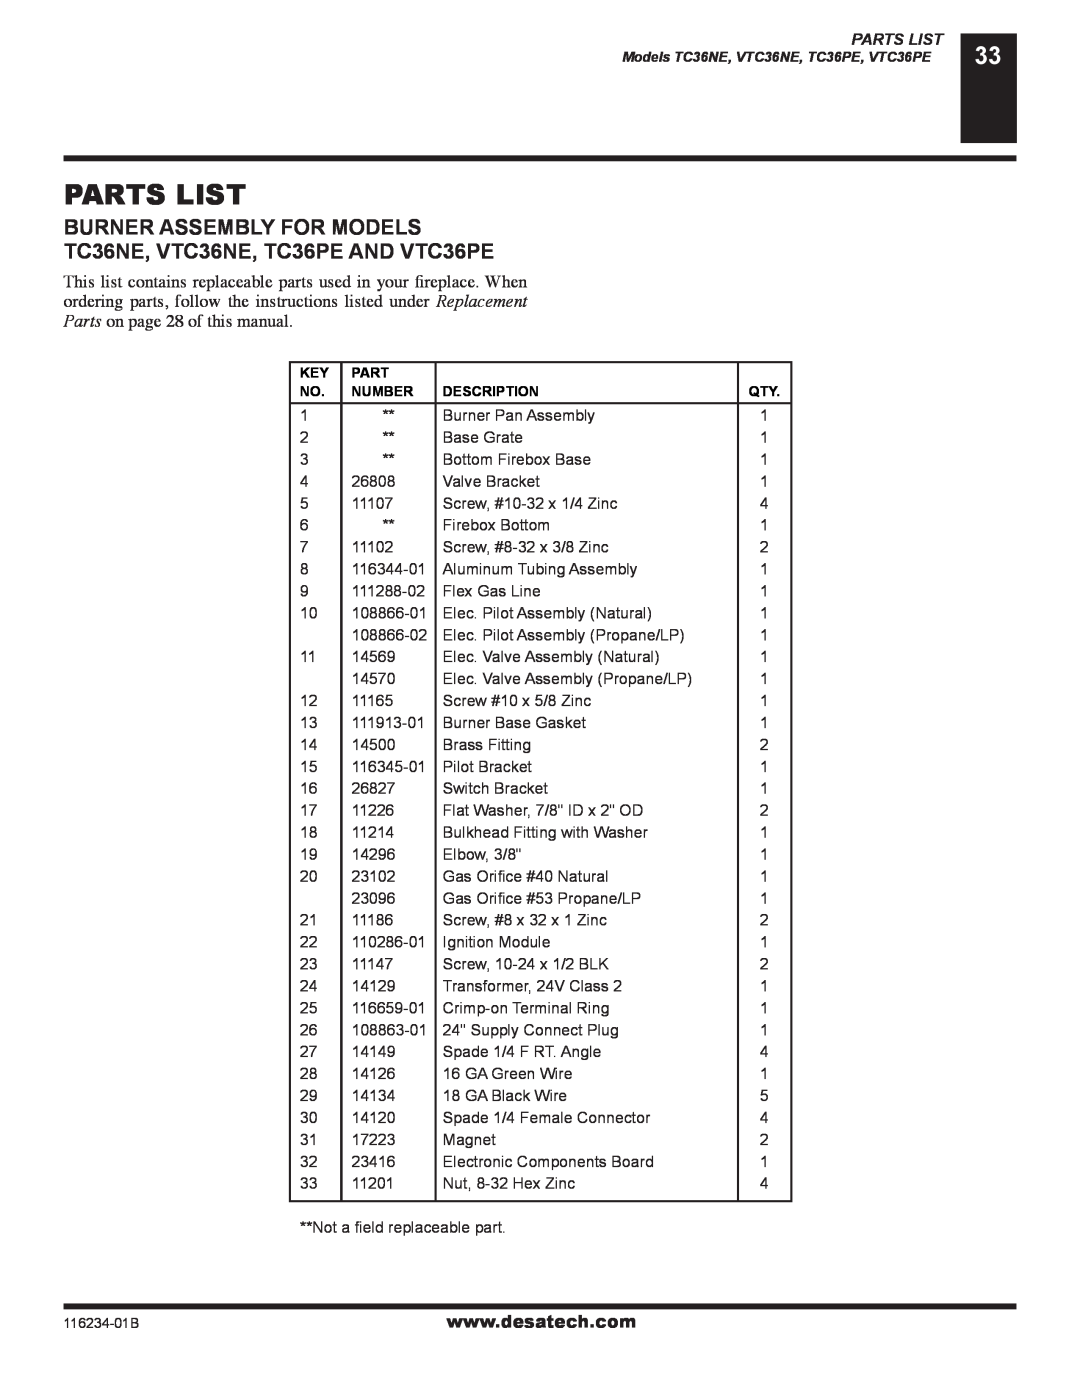 Desa (V)TC36NE, (V)TC36PE installation manual Parts List, Burner Pan Assembly 